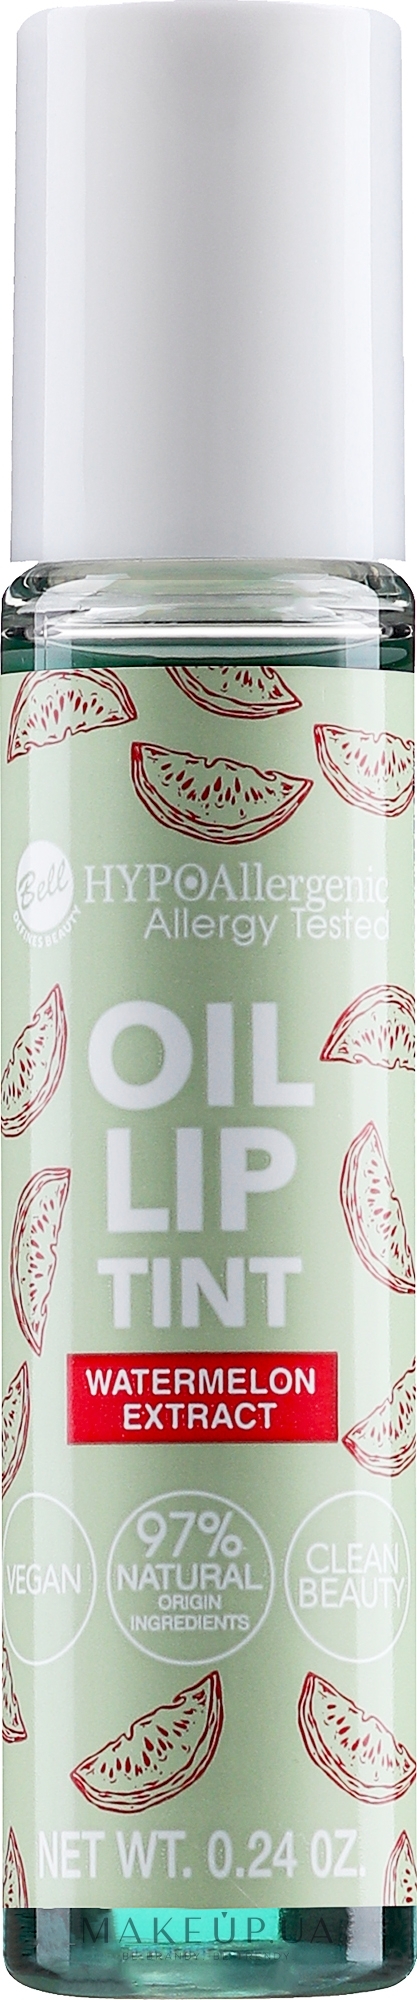 Гипоаллергенный масляный тинт для губ - Bell Hypoallergenic Oil Lip Tint Watermelon Extract — фото 7g